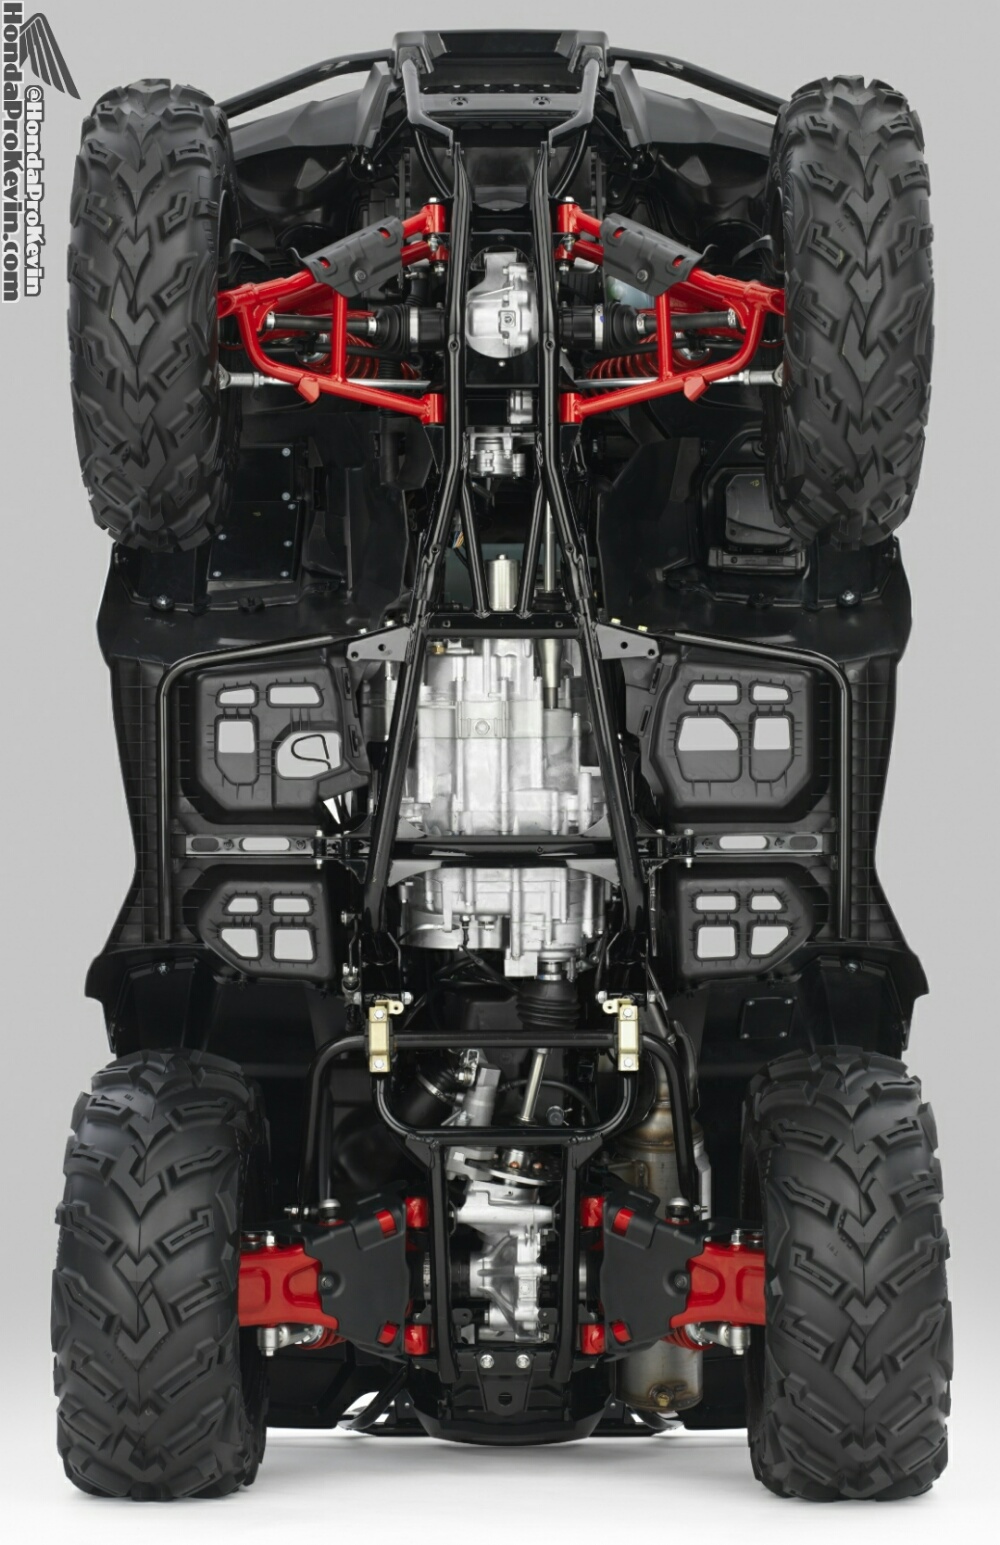 2021 Honda Foreman Rubicon 520 ATV Skid Plates / Guards - TRX500 Review of Specs